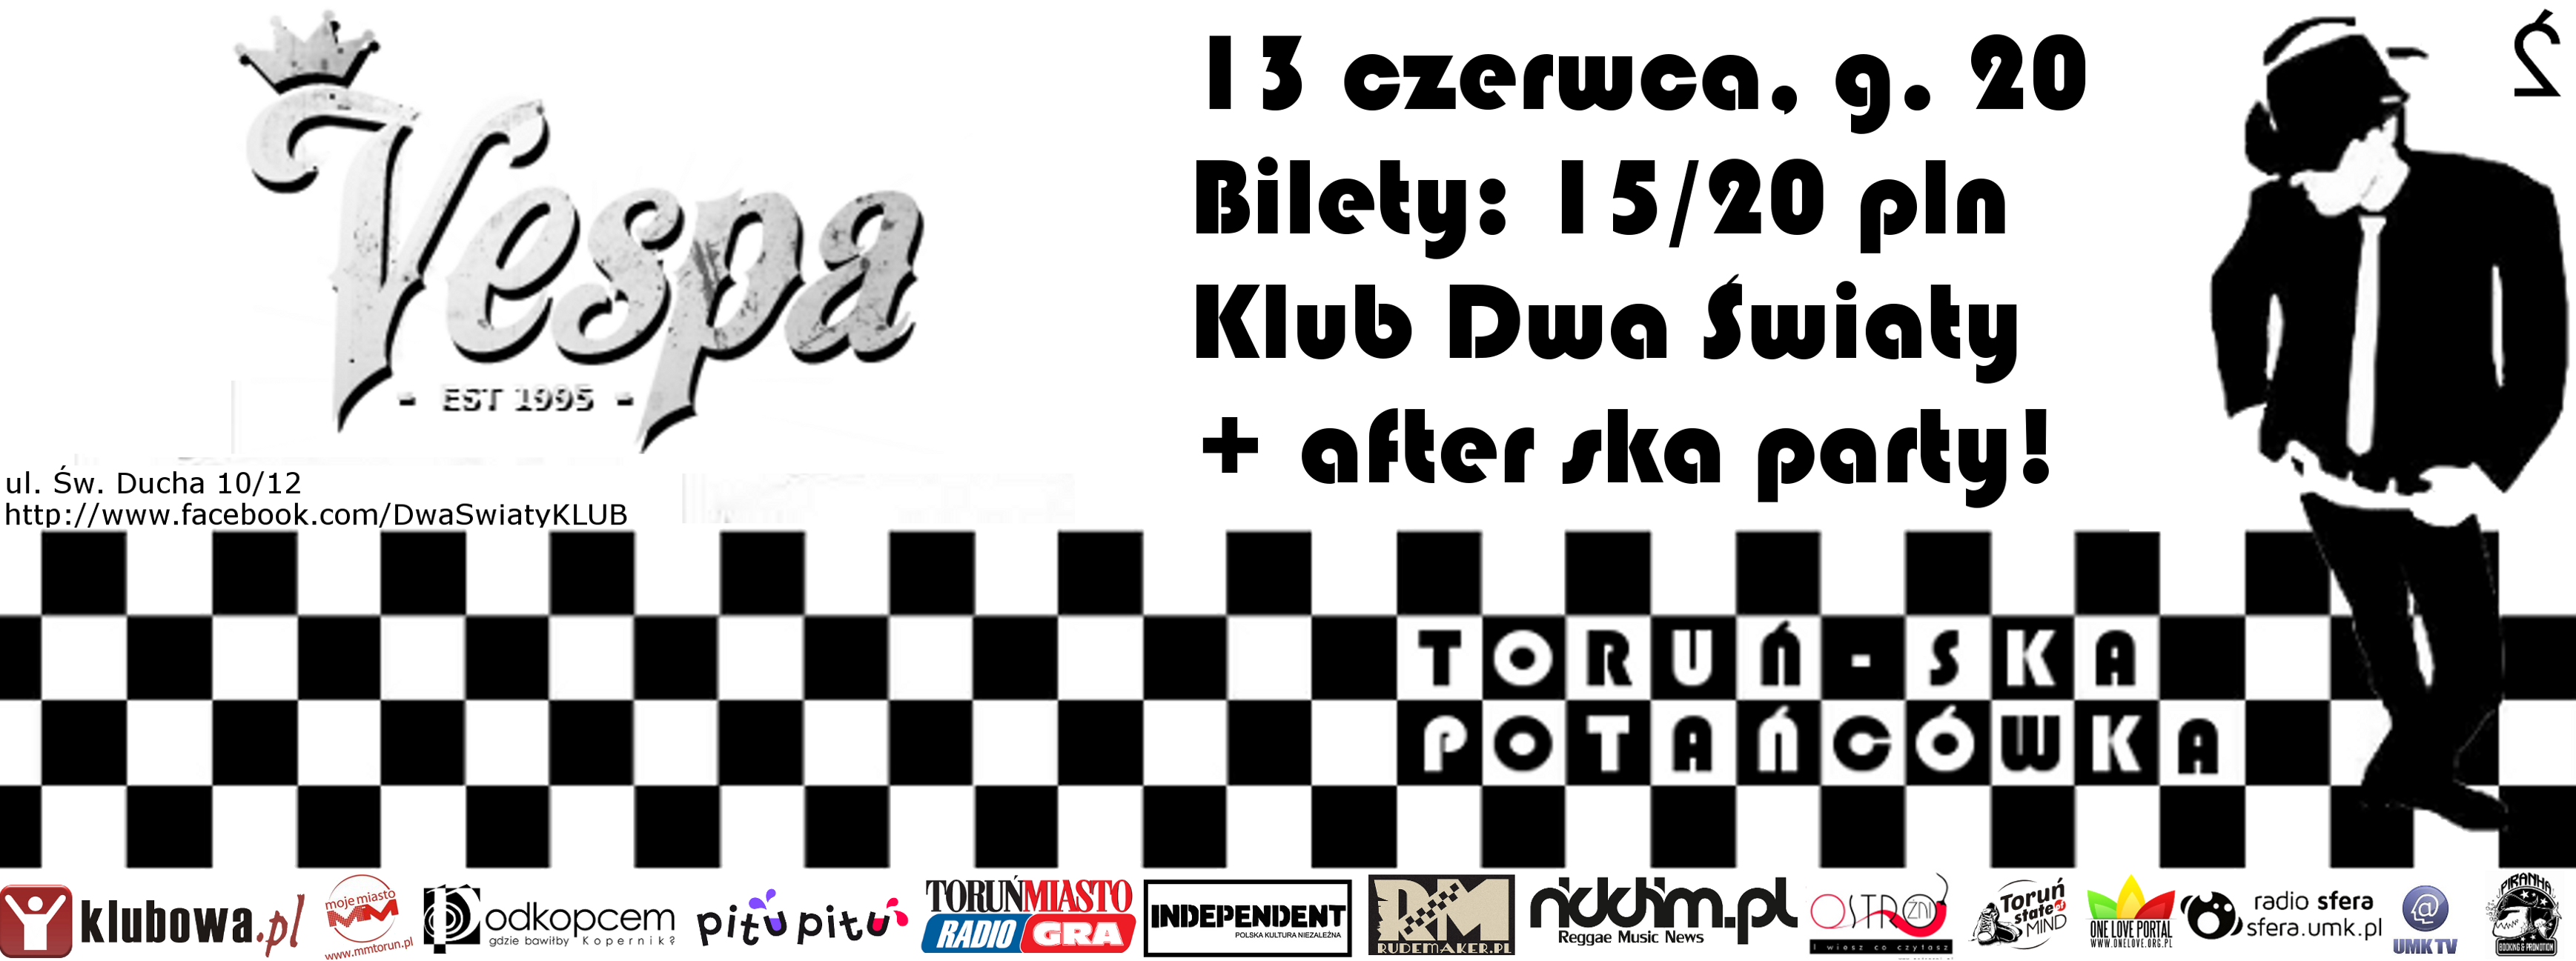 Toruń-SKA Potańcówka #10